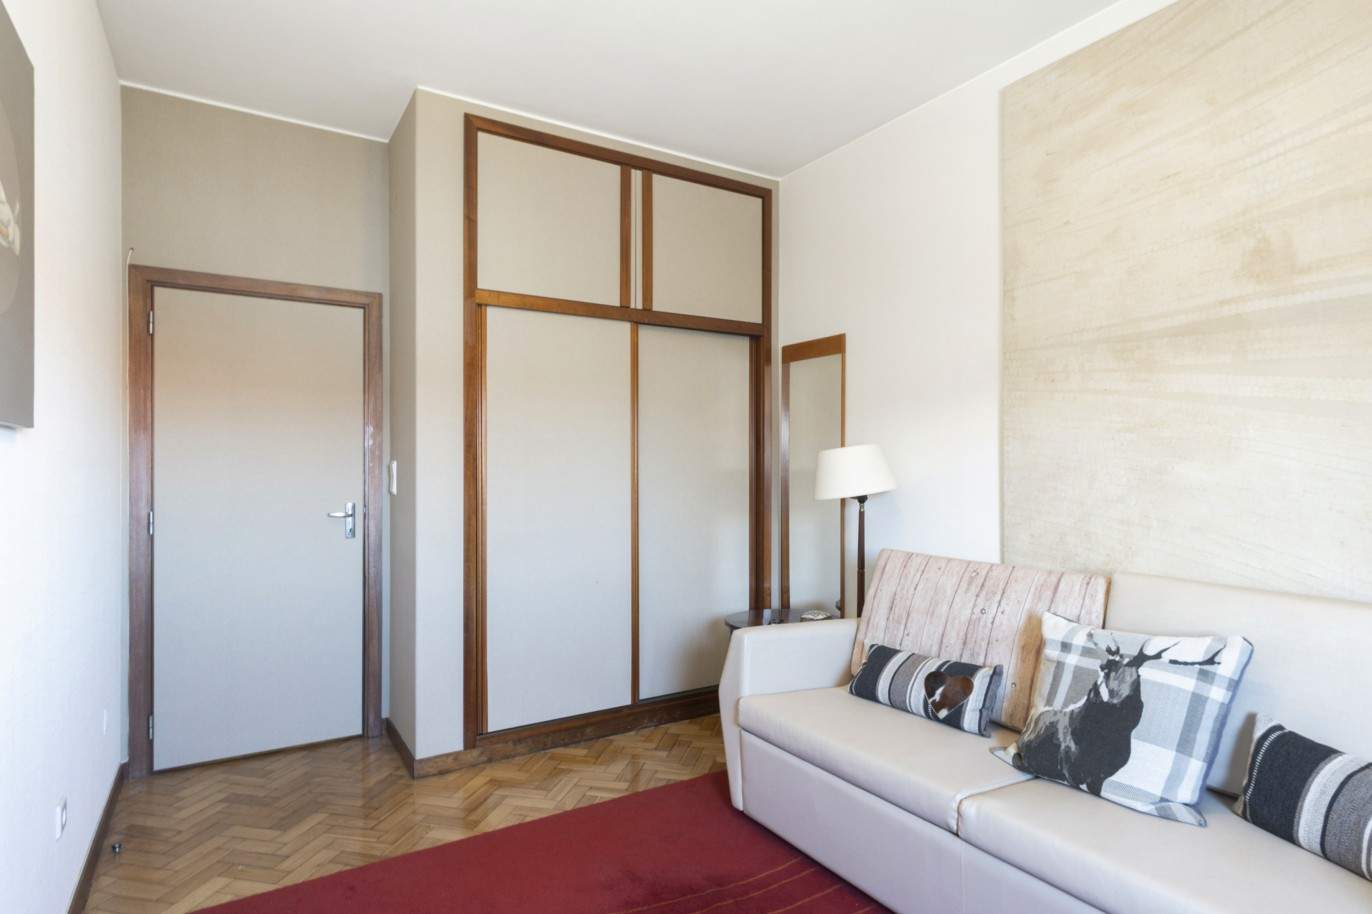 Duplex Apartment T3+1 with balcony, for sale, near the University Pole, Porto, Portugal_212478